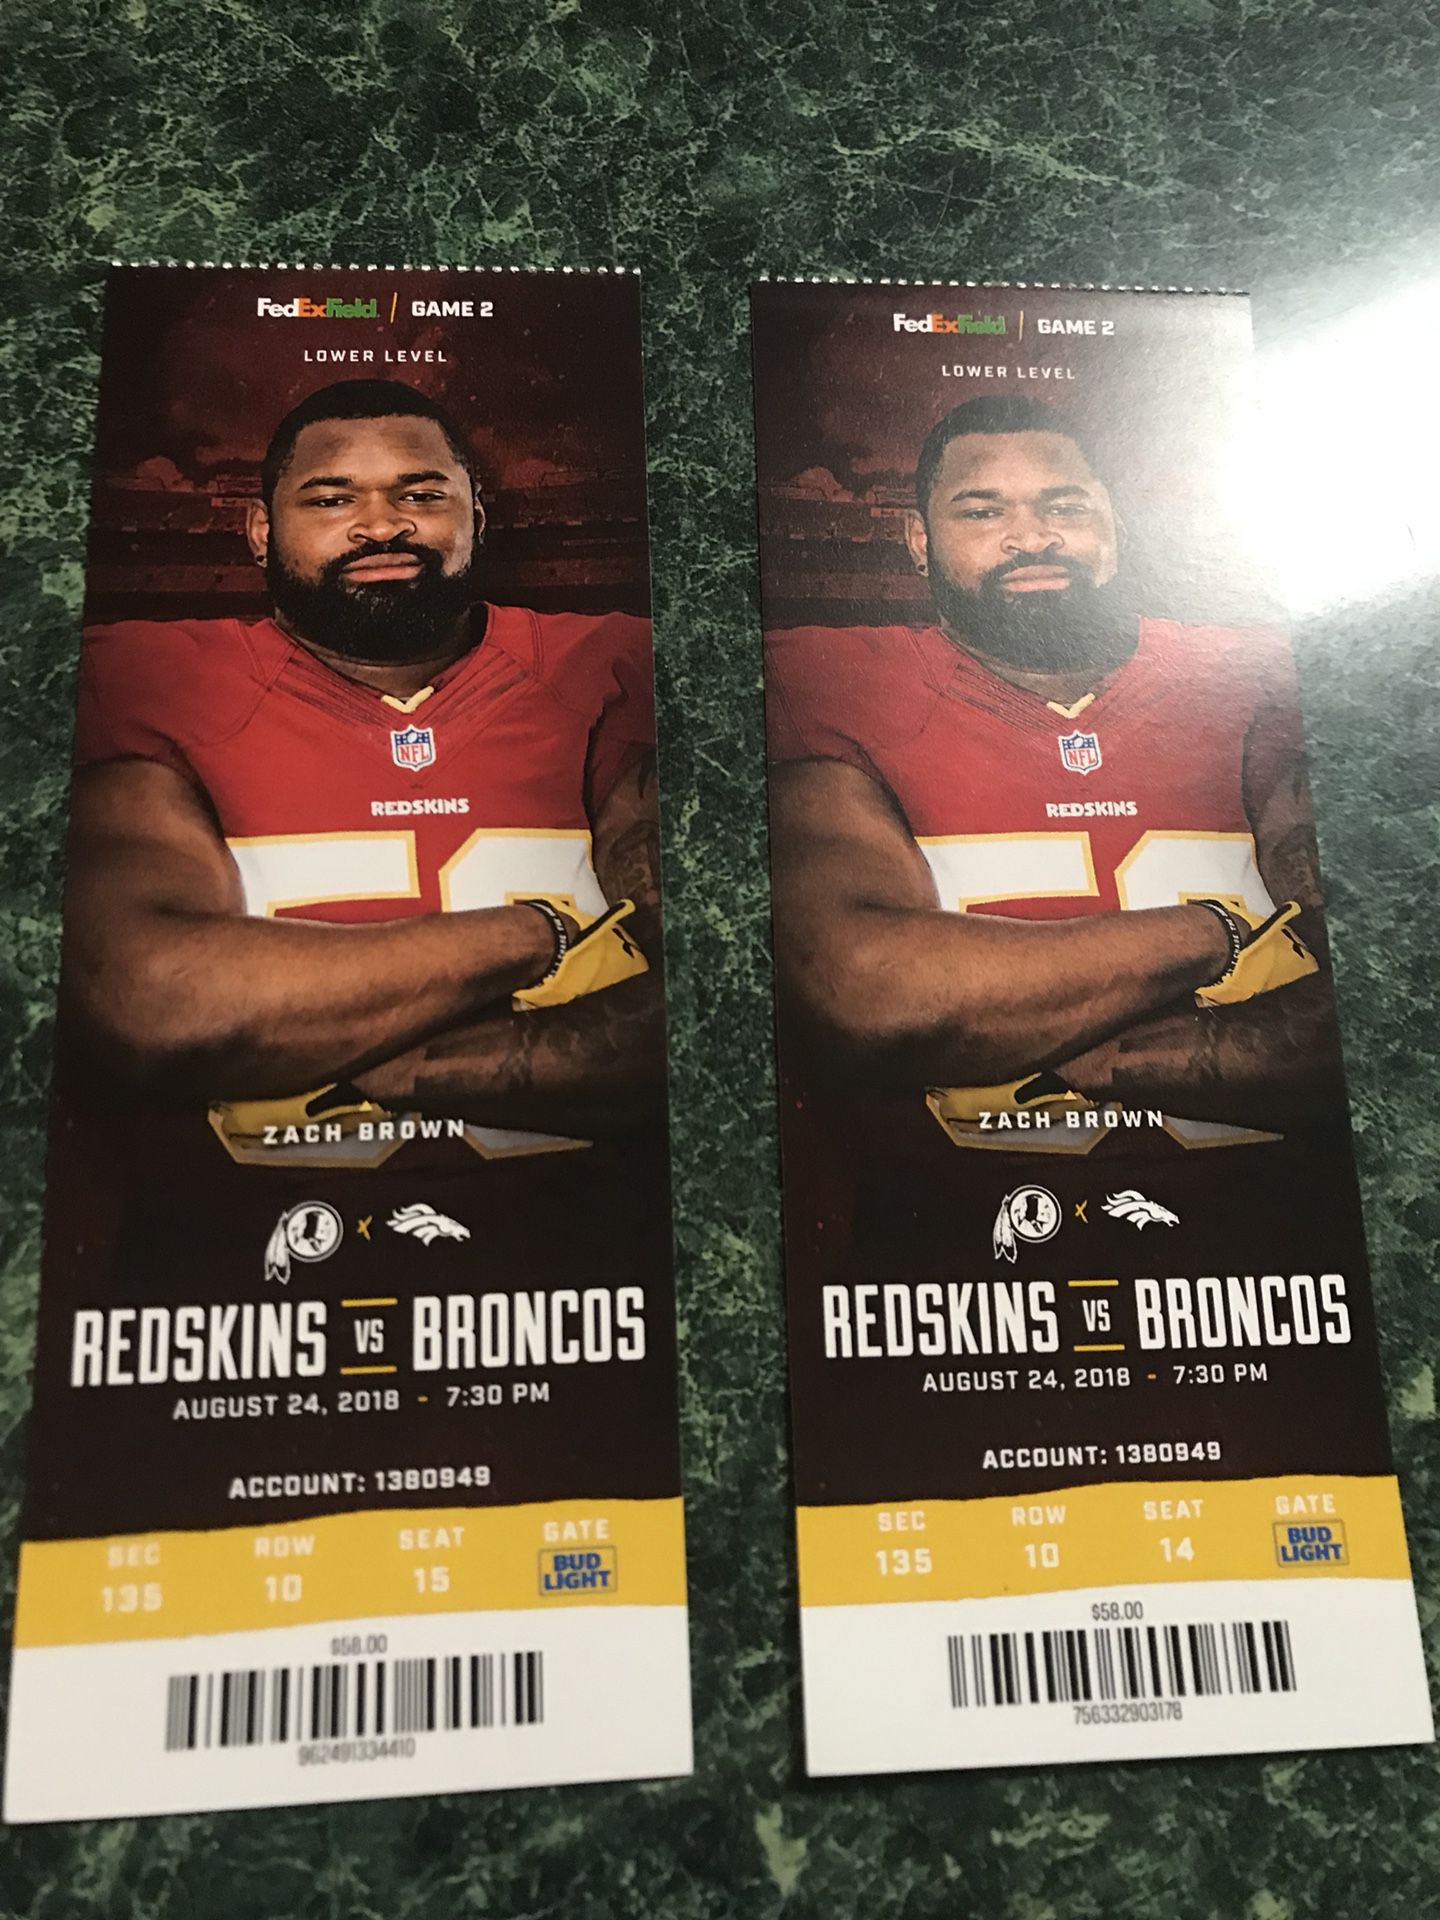 Redskins vs Broncos tickets